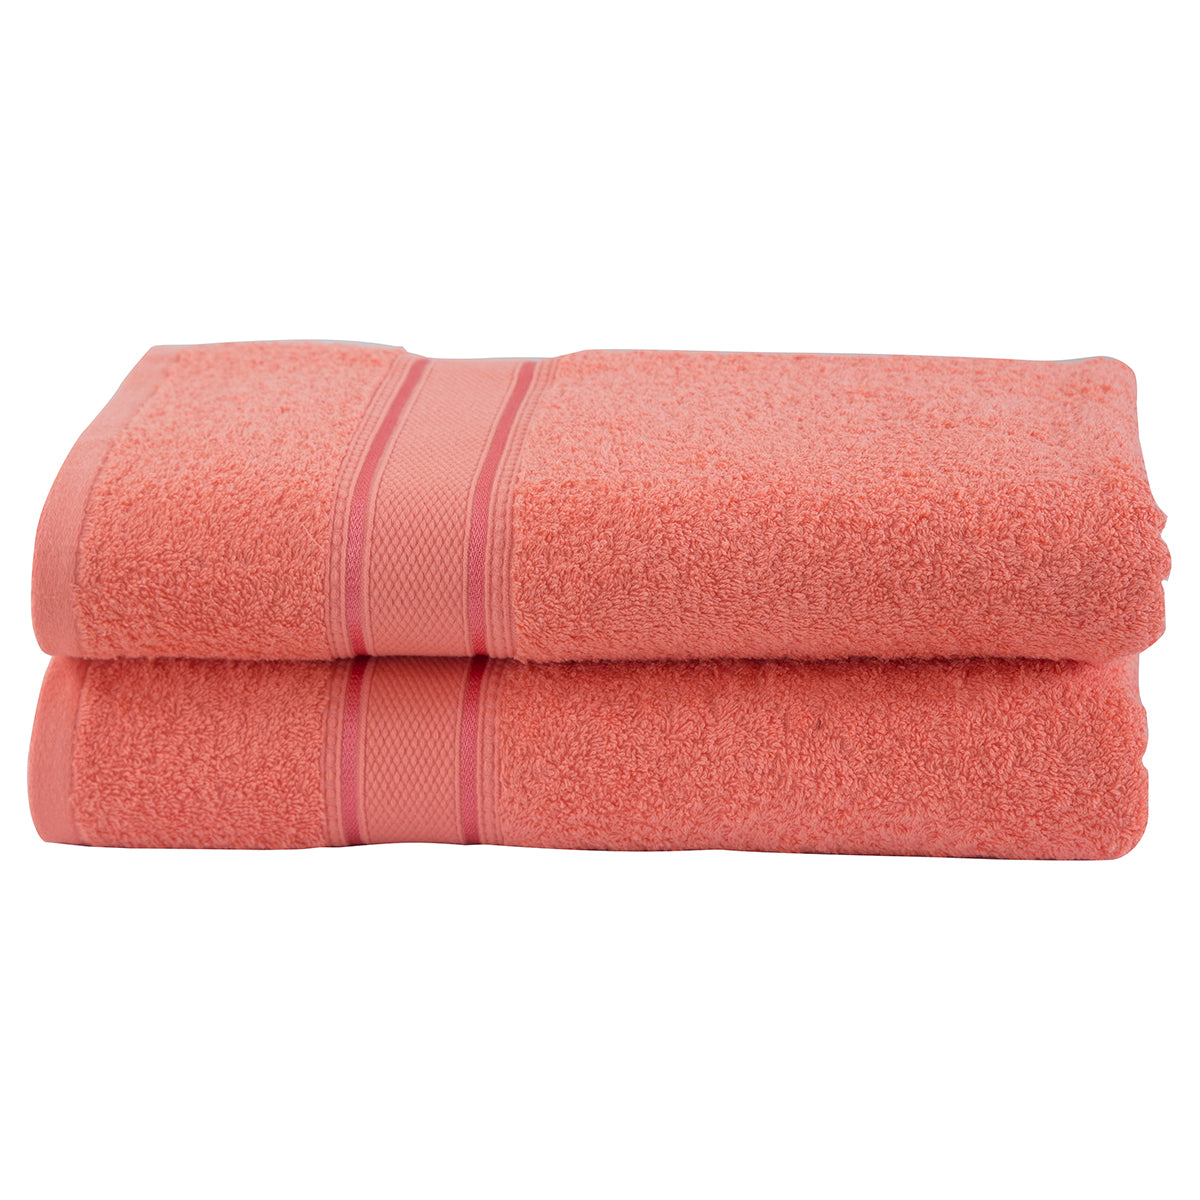 Eddie Extra Soft Orange Towel Set